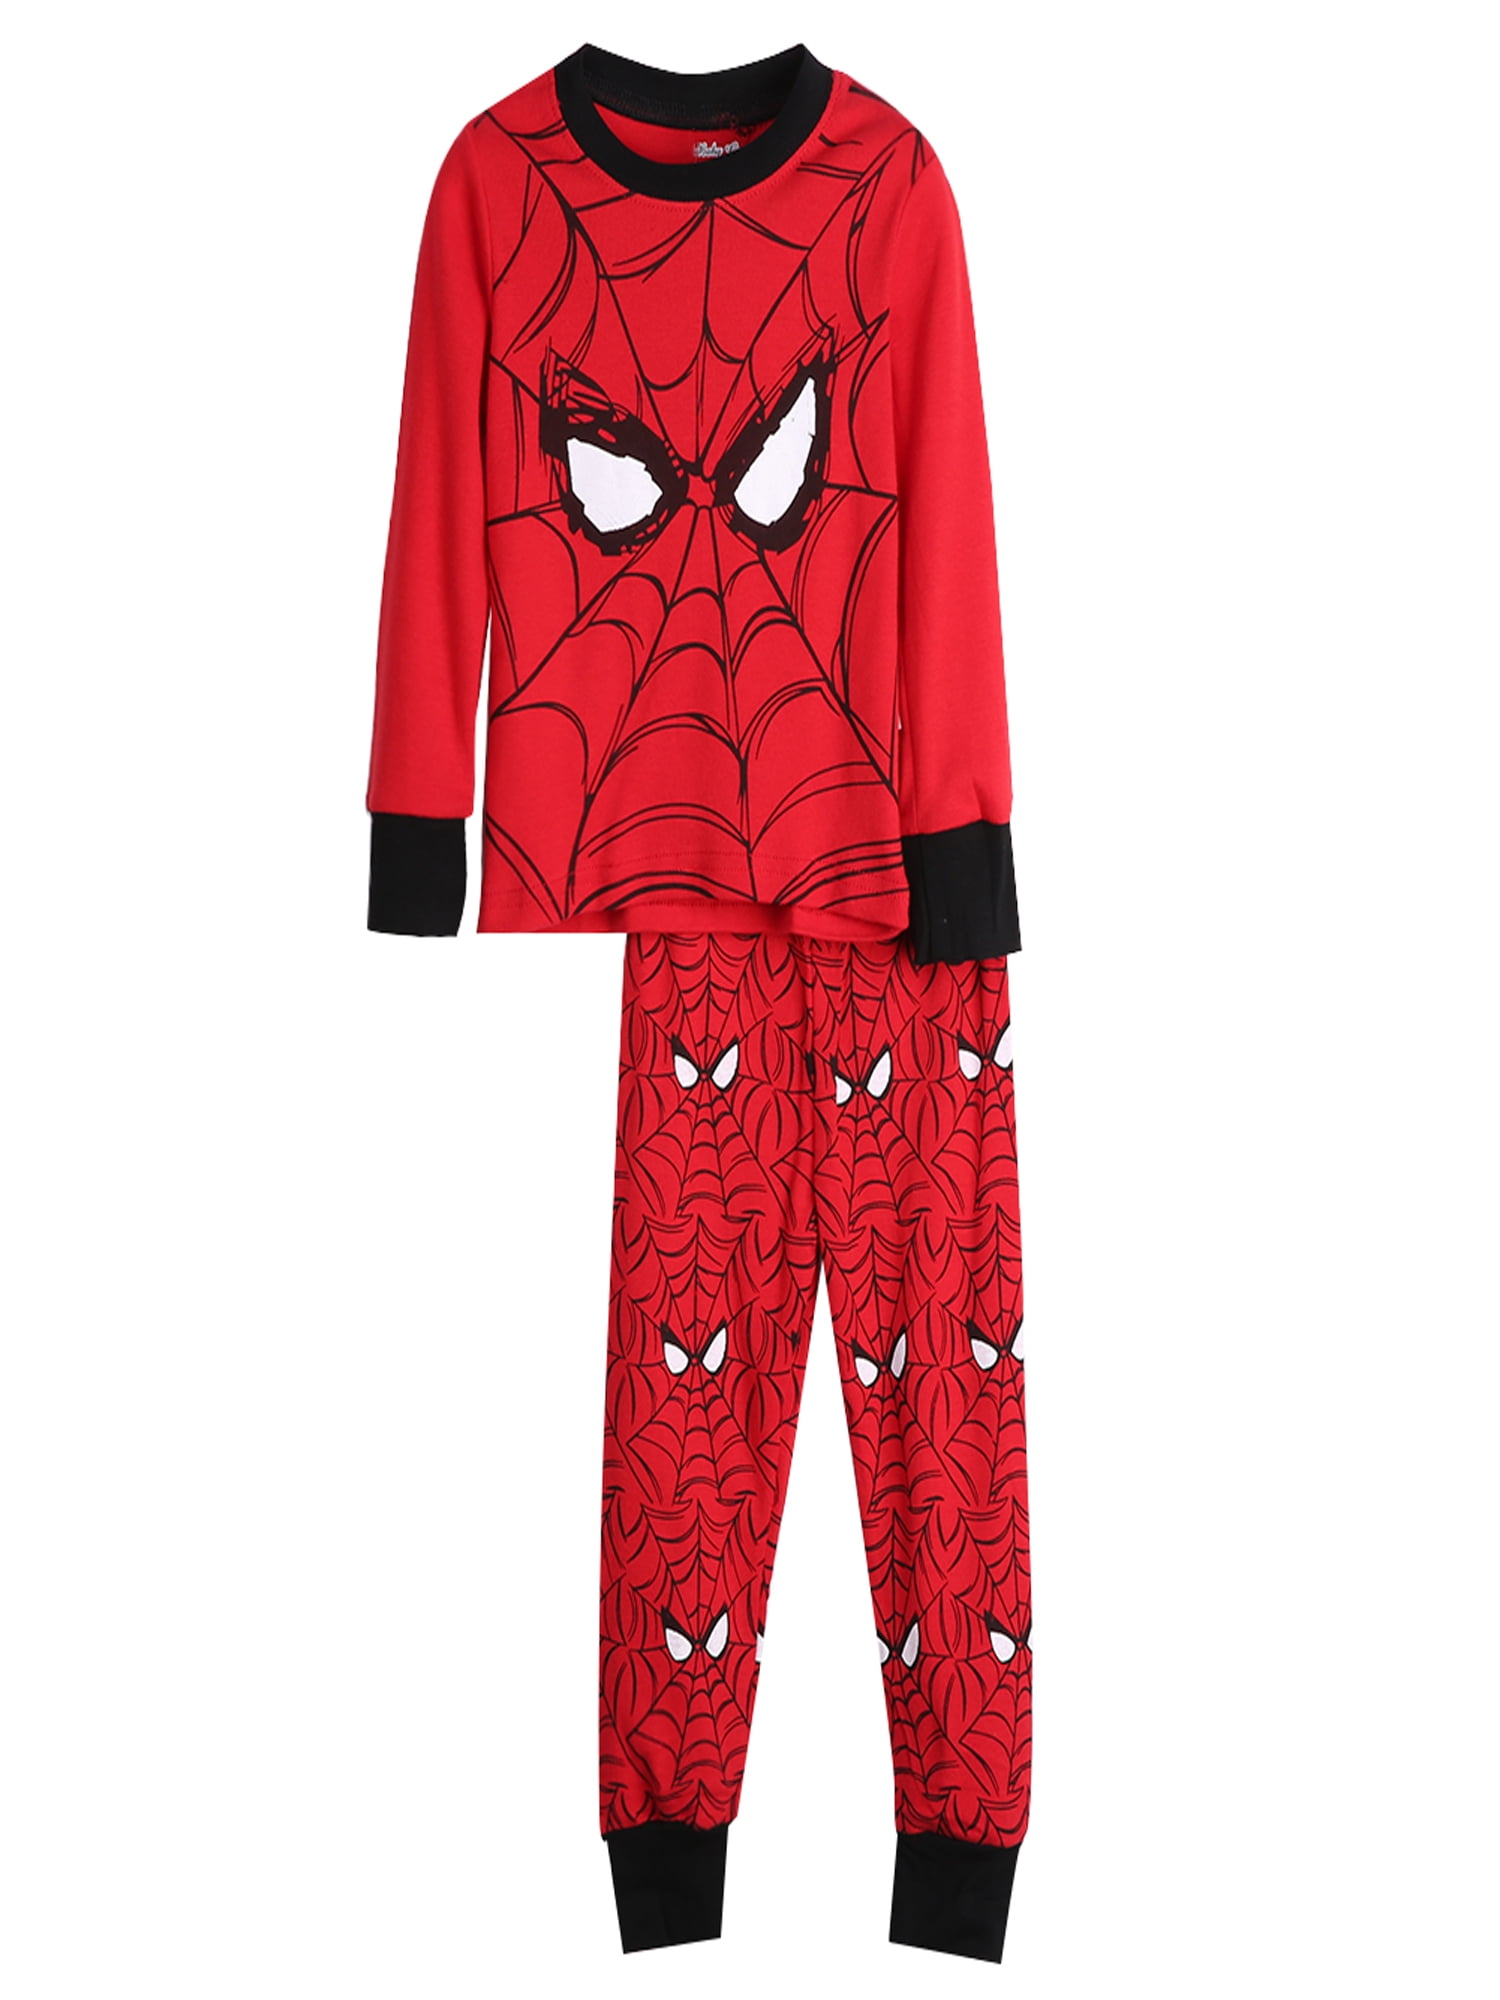 2Pcs/Set Kids Boys Spider-Man Pj Pyjamas Sleepwear Pajamas Pjs Matching Set 1-8Y 